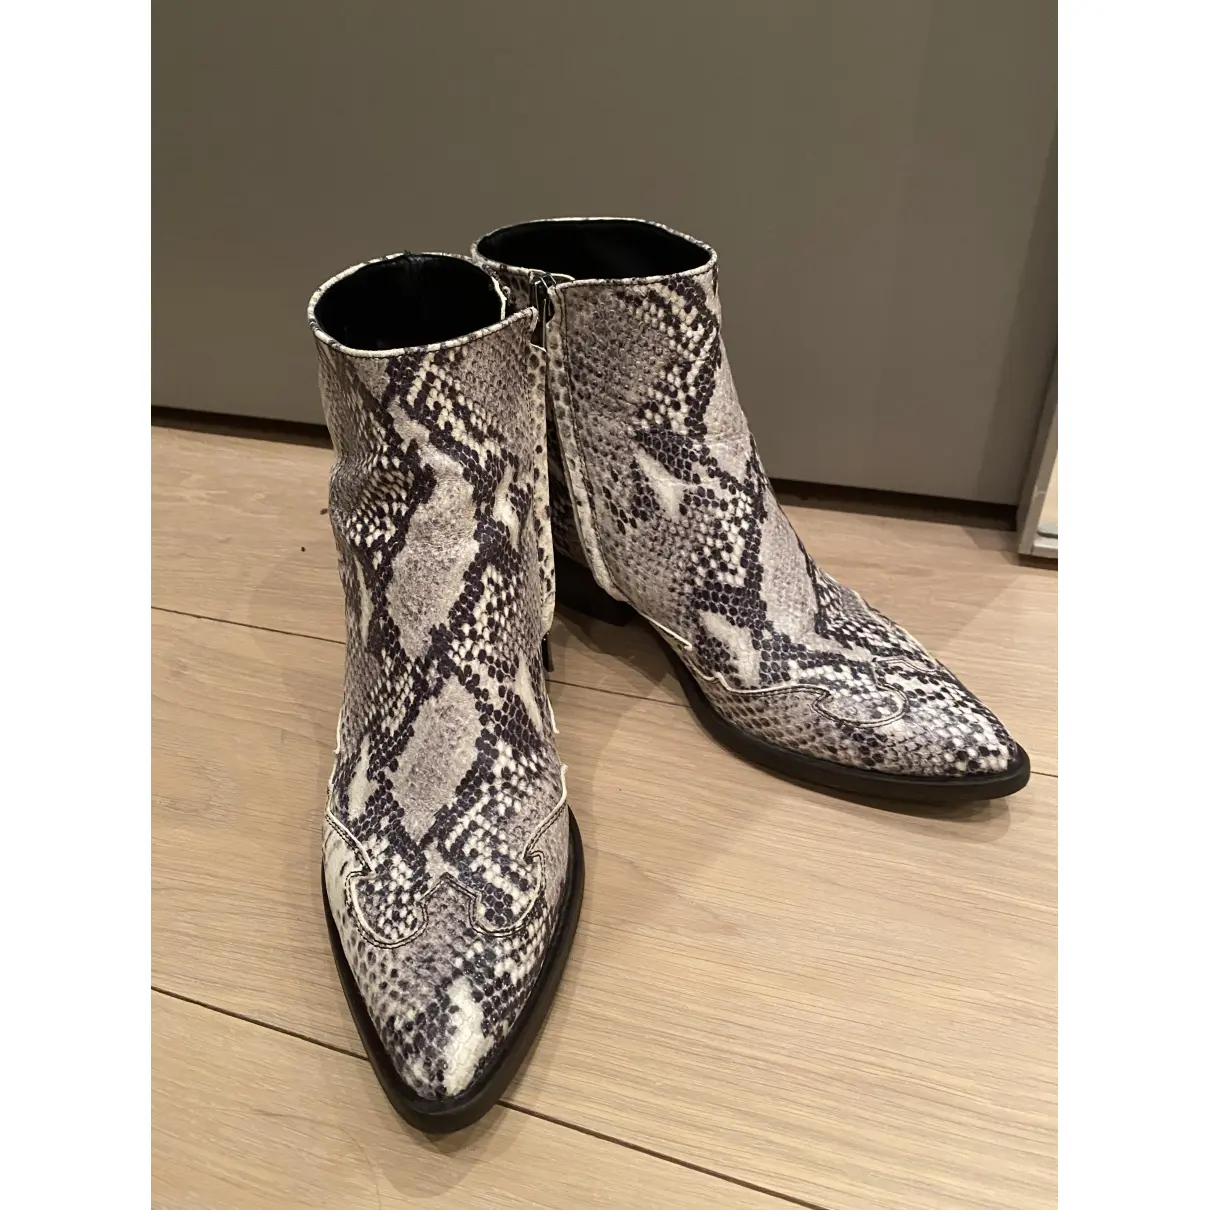 Buy Claudie Pierlot Spring Summer 2019 leather western boots online